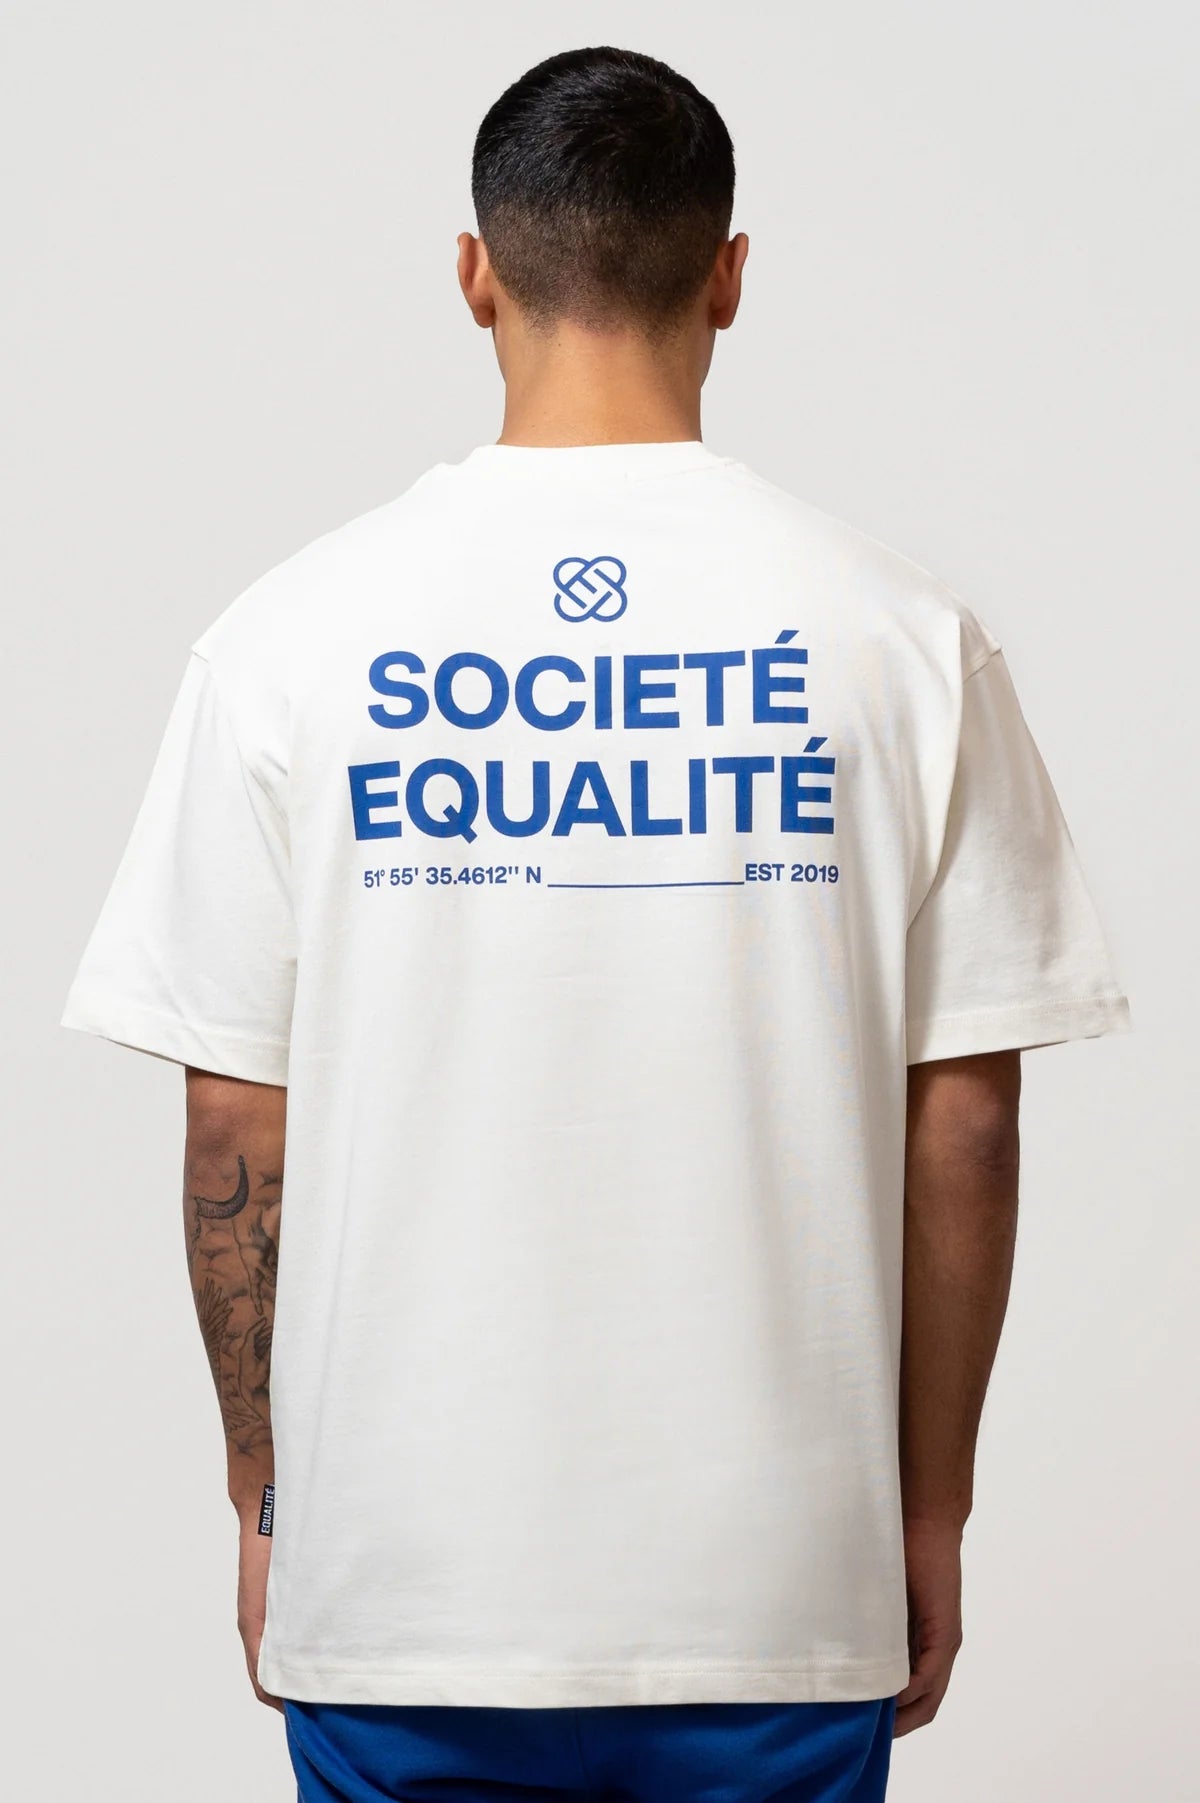 Equalite societé oversized tee - off white/blue